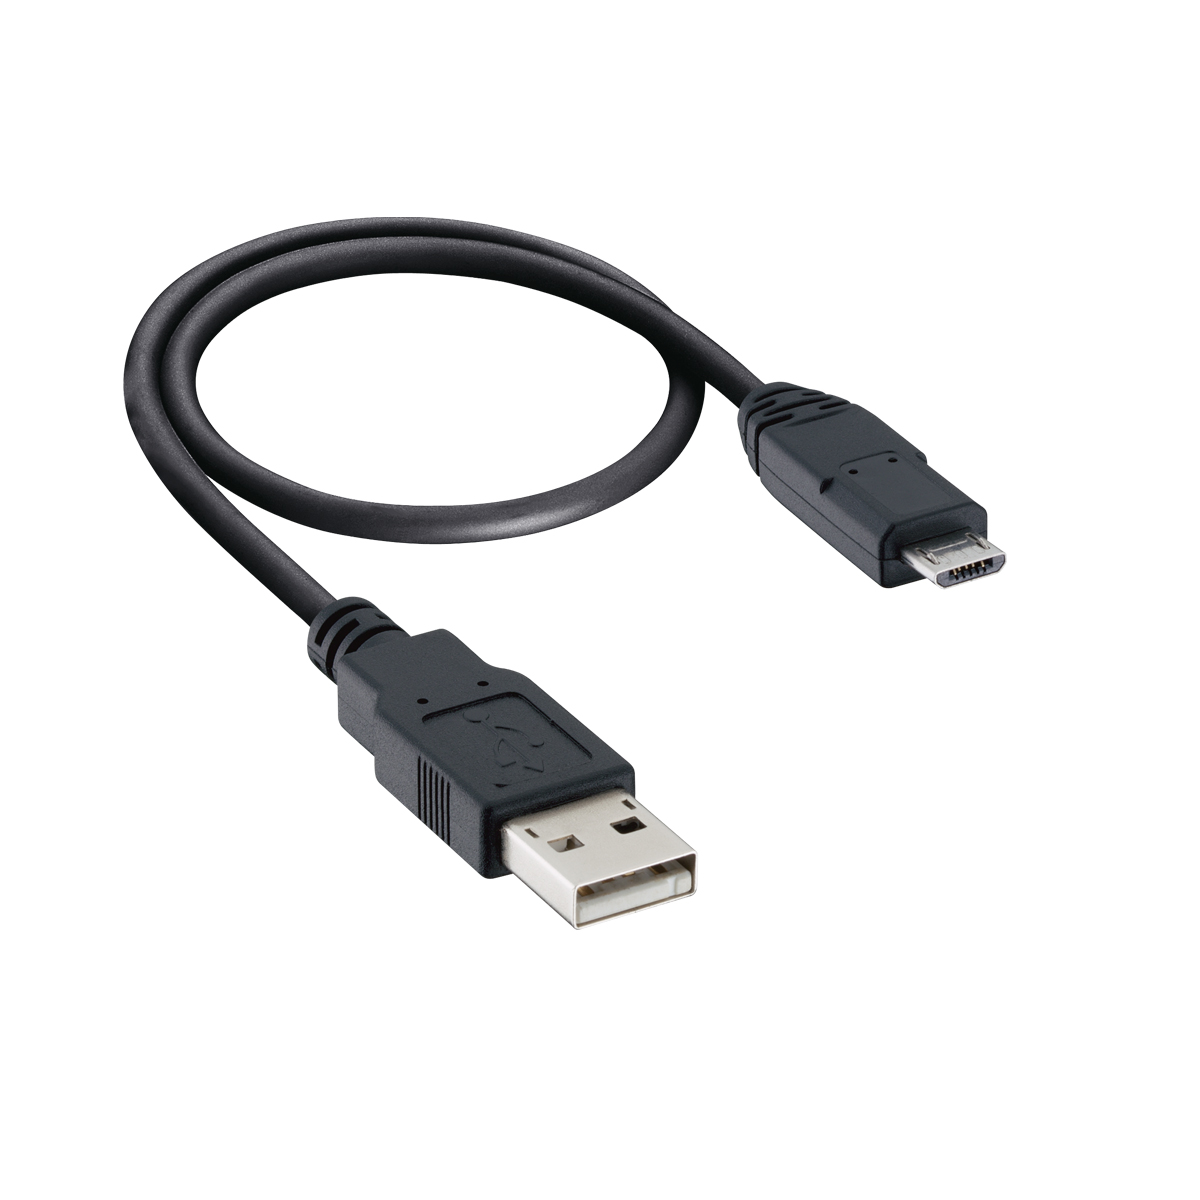 Lumberg: 2482 (Series 24 | USB and IEEE 1394 connectors)